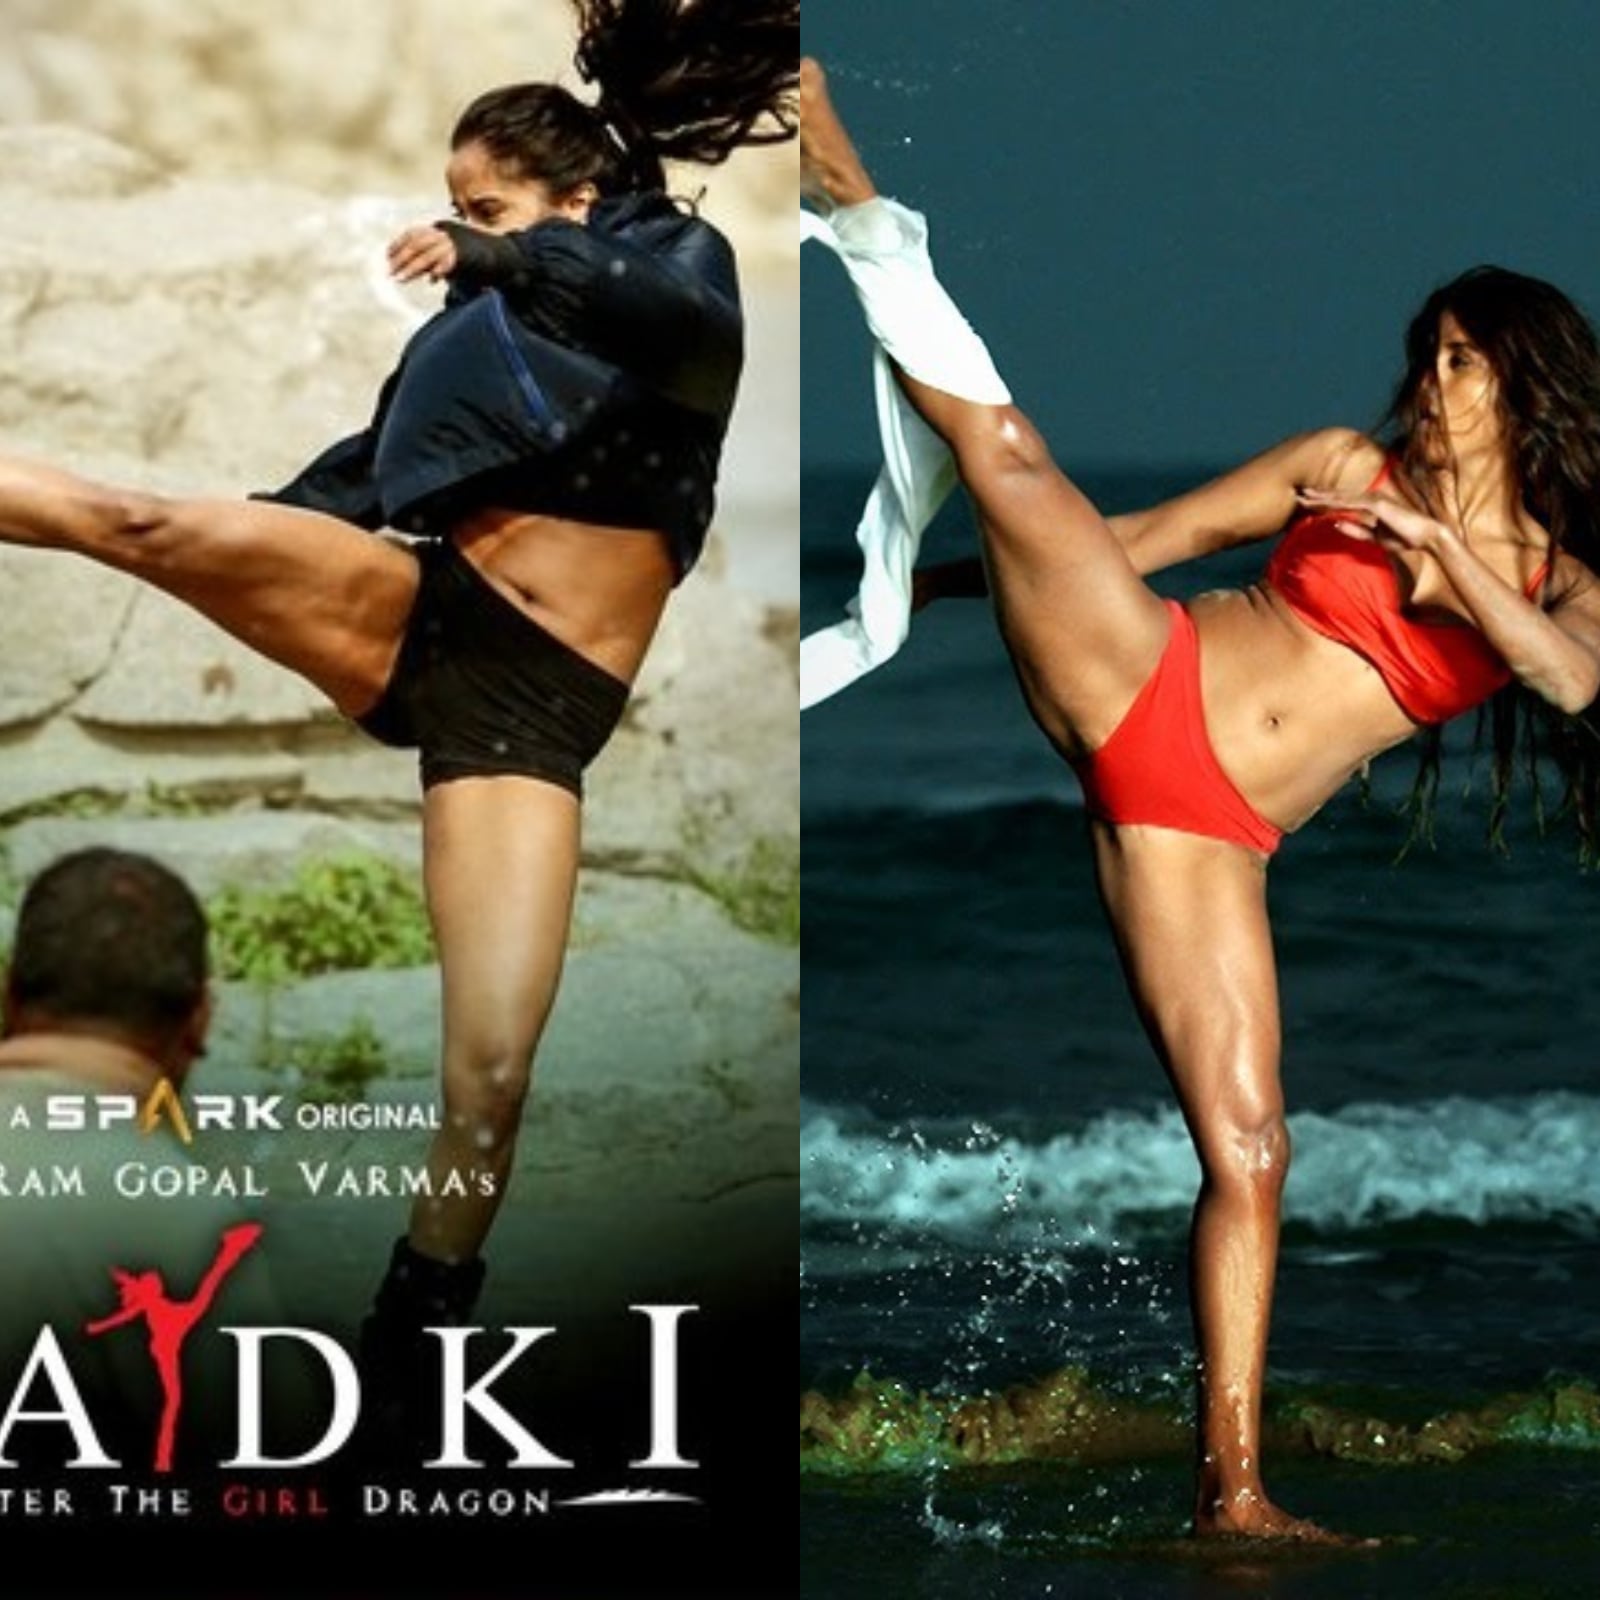 RGV Ladki movie trailer: రామ్ గోపాల్ వర్మ 'లడికి' ట్రైలర్.. మార్షల్ ఆర్ట్స్ విత్ గ్లామర్.. | Trailer for RGV Pooja Bhalekar ambitious visual treat Ladki The Dragon Girl is out pk– News18 Telugu